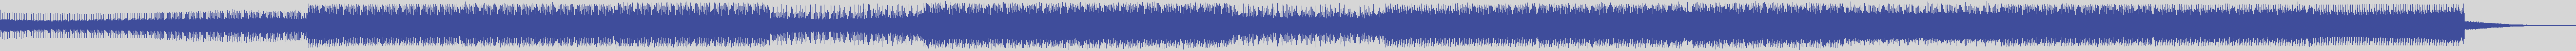 atomic_recordings [AR016] Secret Groovers - Timeless Wire [Jorge Romero Mix] audio wave form